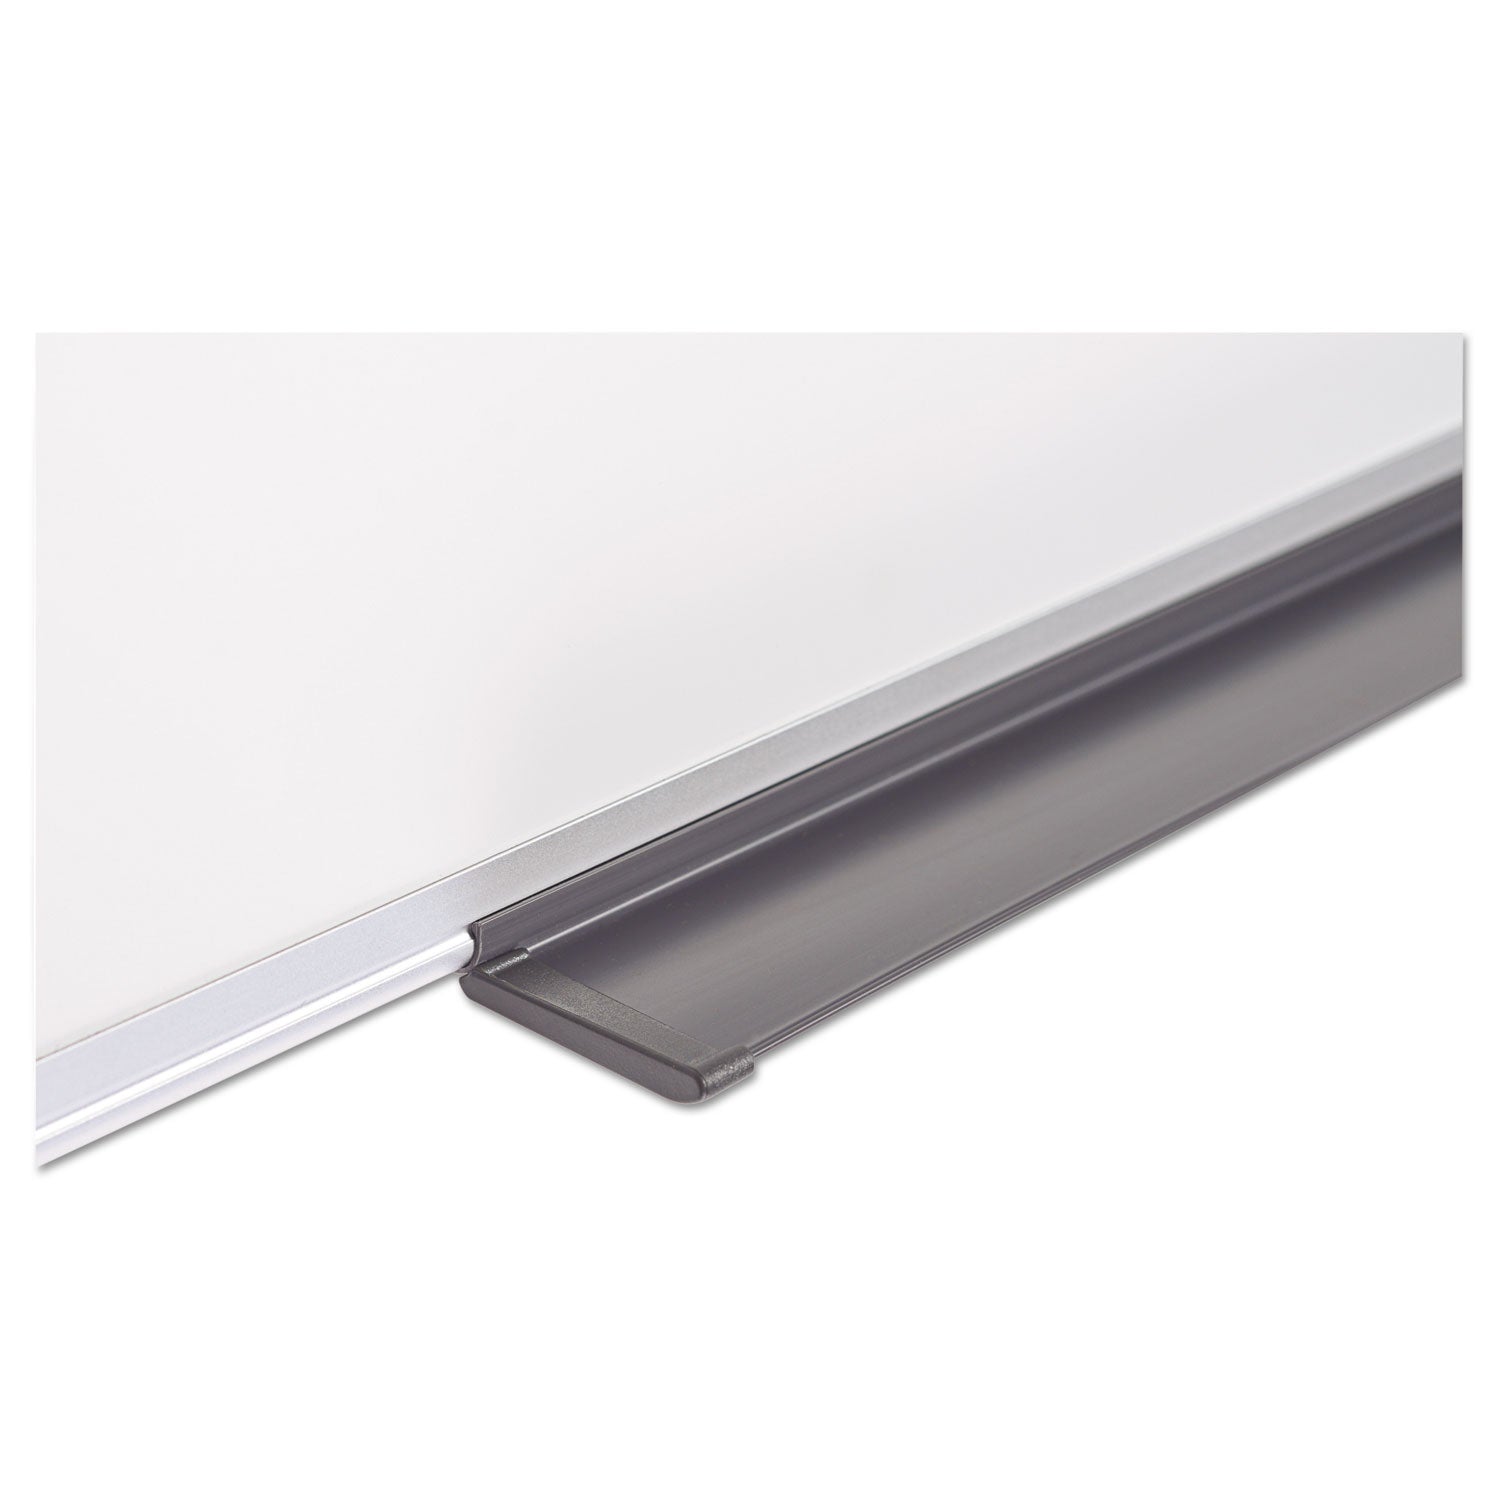 Value Melamine Dry Erase Board, 18 x 24, White Surface, Silver Aluminum Frame - 